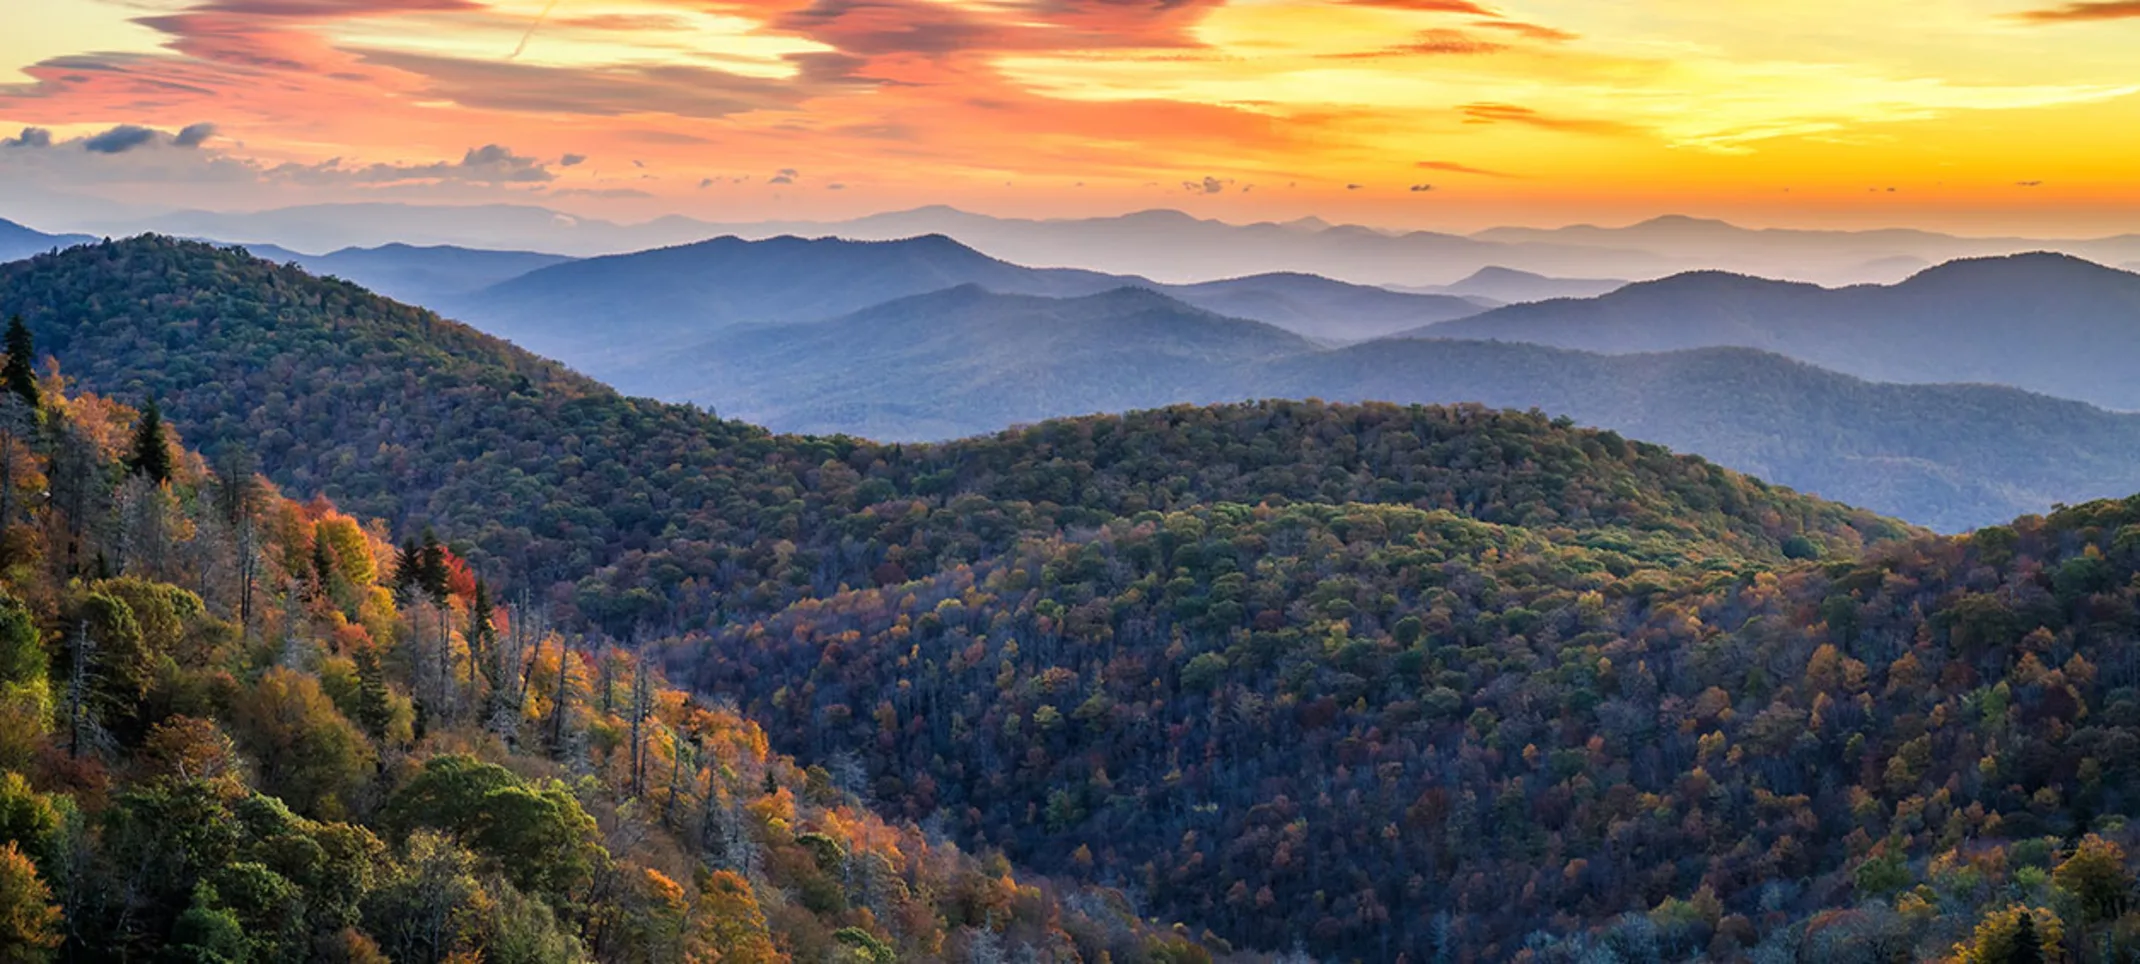 The mountains of North Georgia